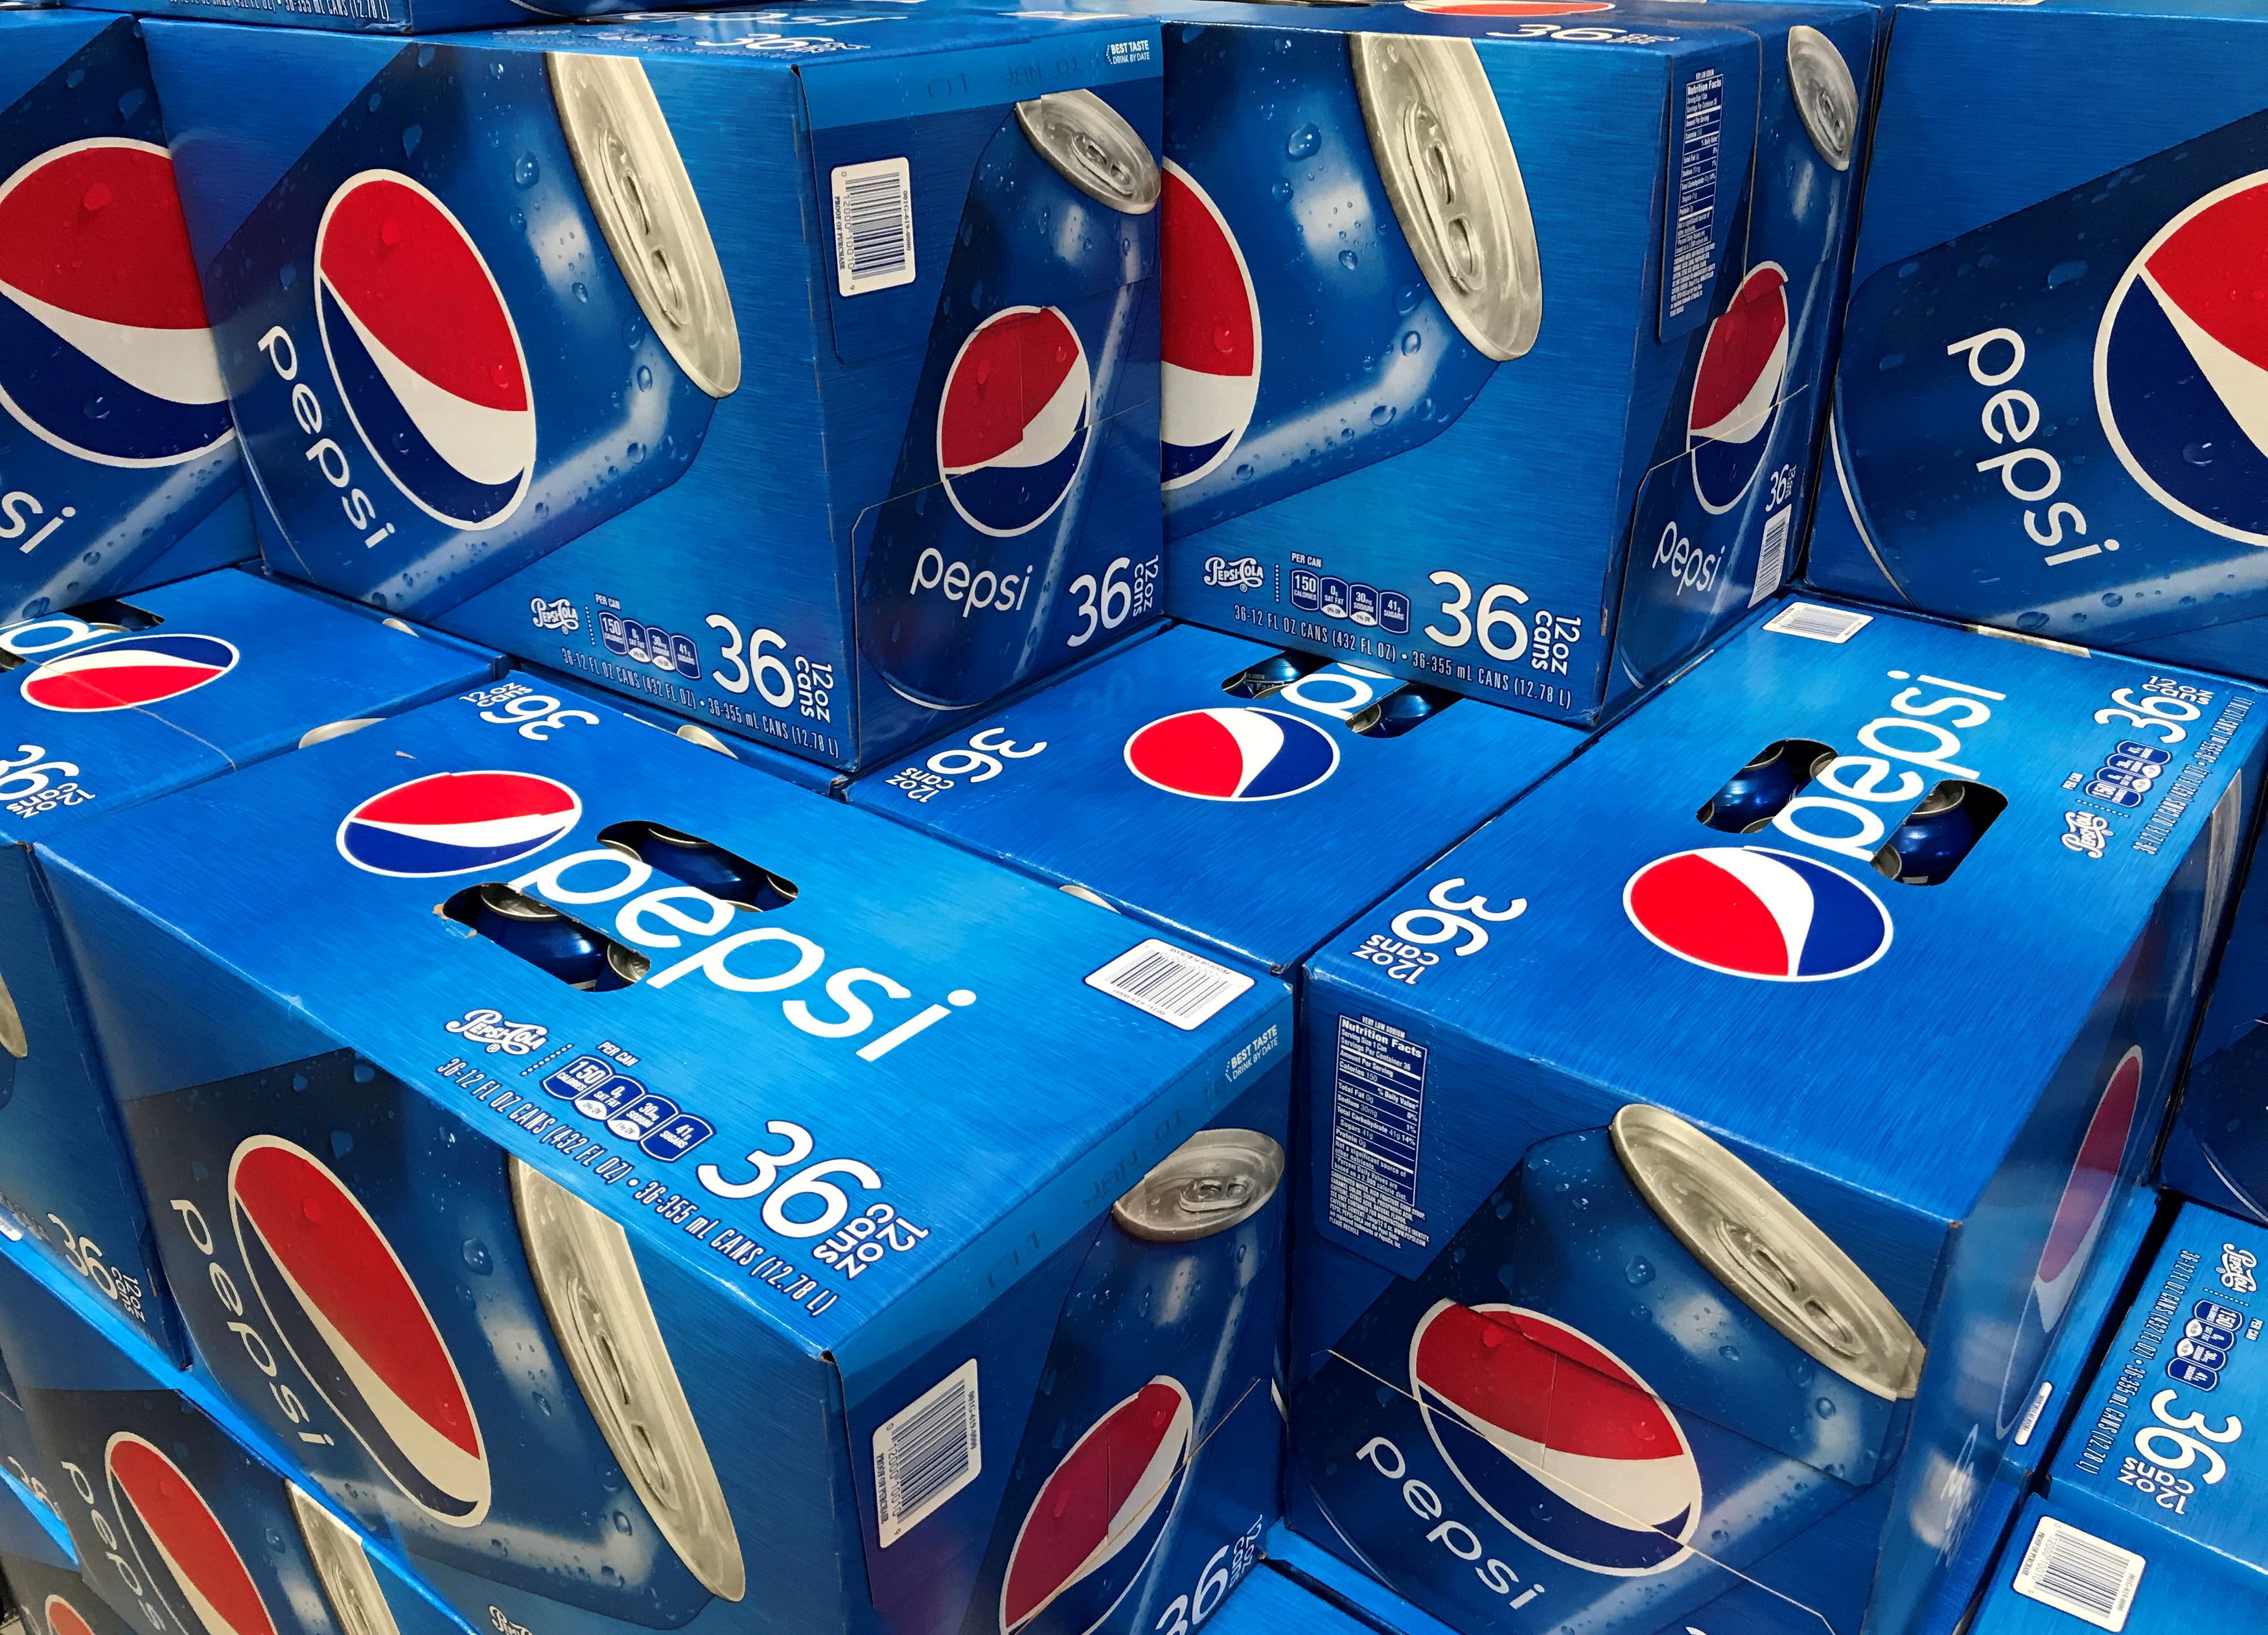 PepsiCo (PEP) Q1 2021 earnings beat